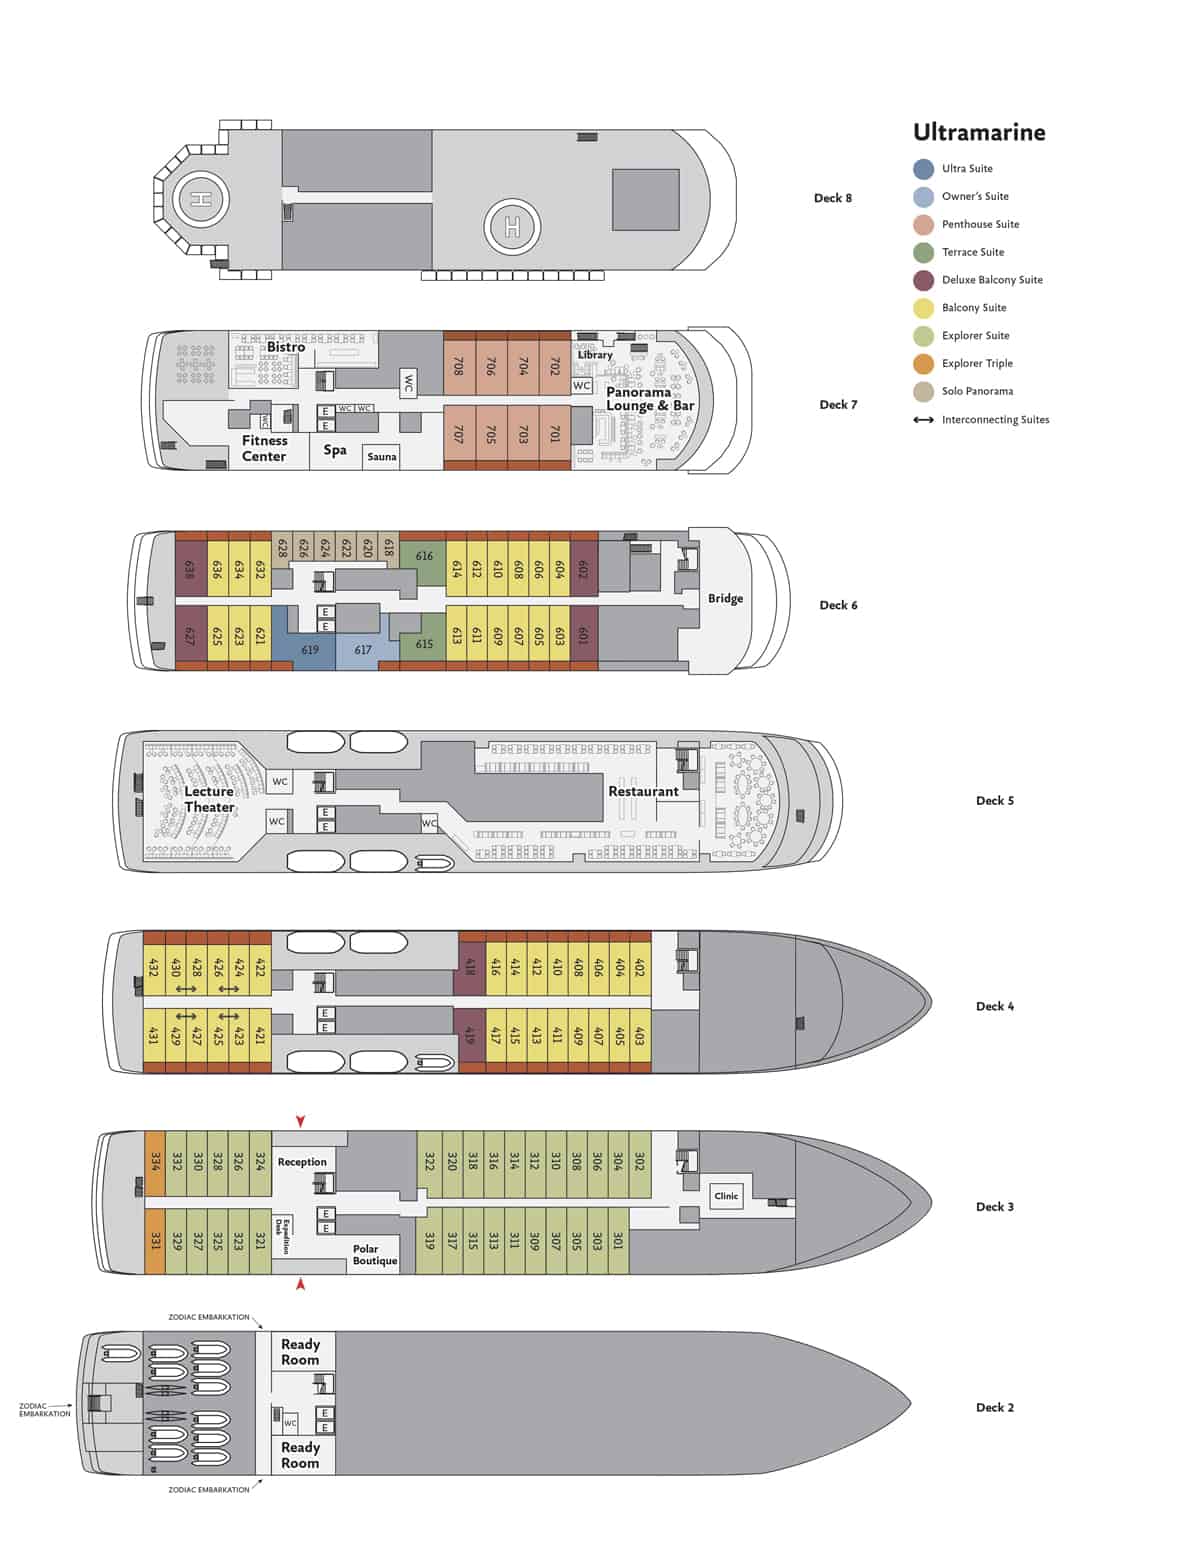 Deck plan of Ultramarine polar vessel showing 103 cabins & 7 decks.